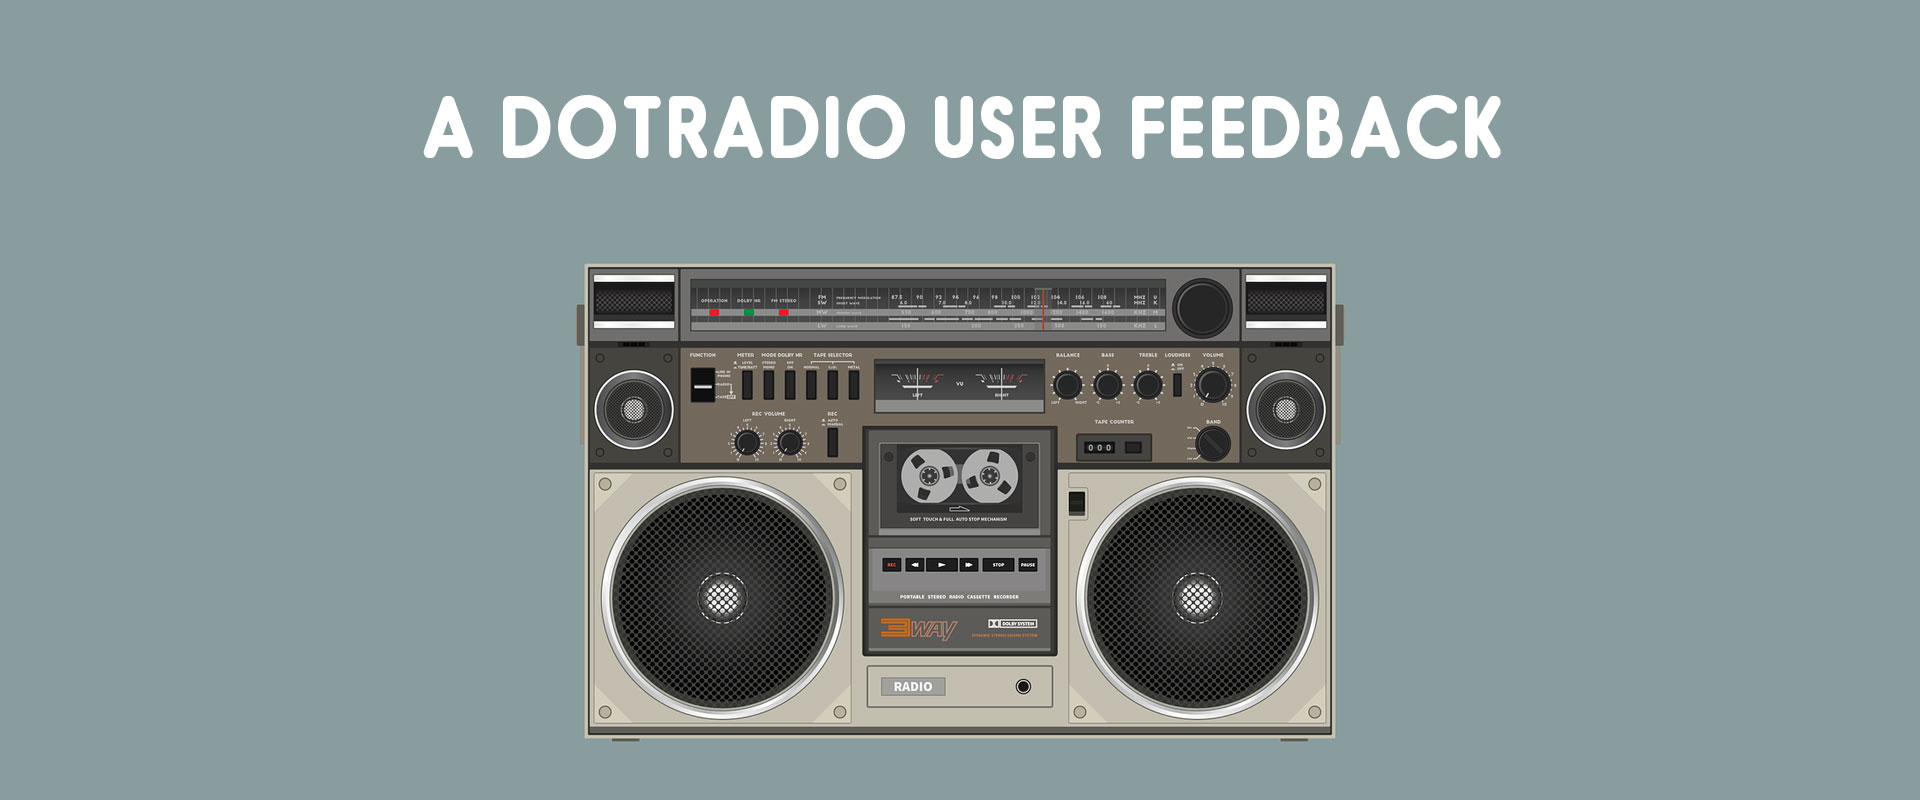 DotRadio user feedback